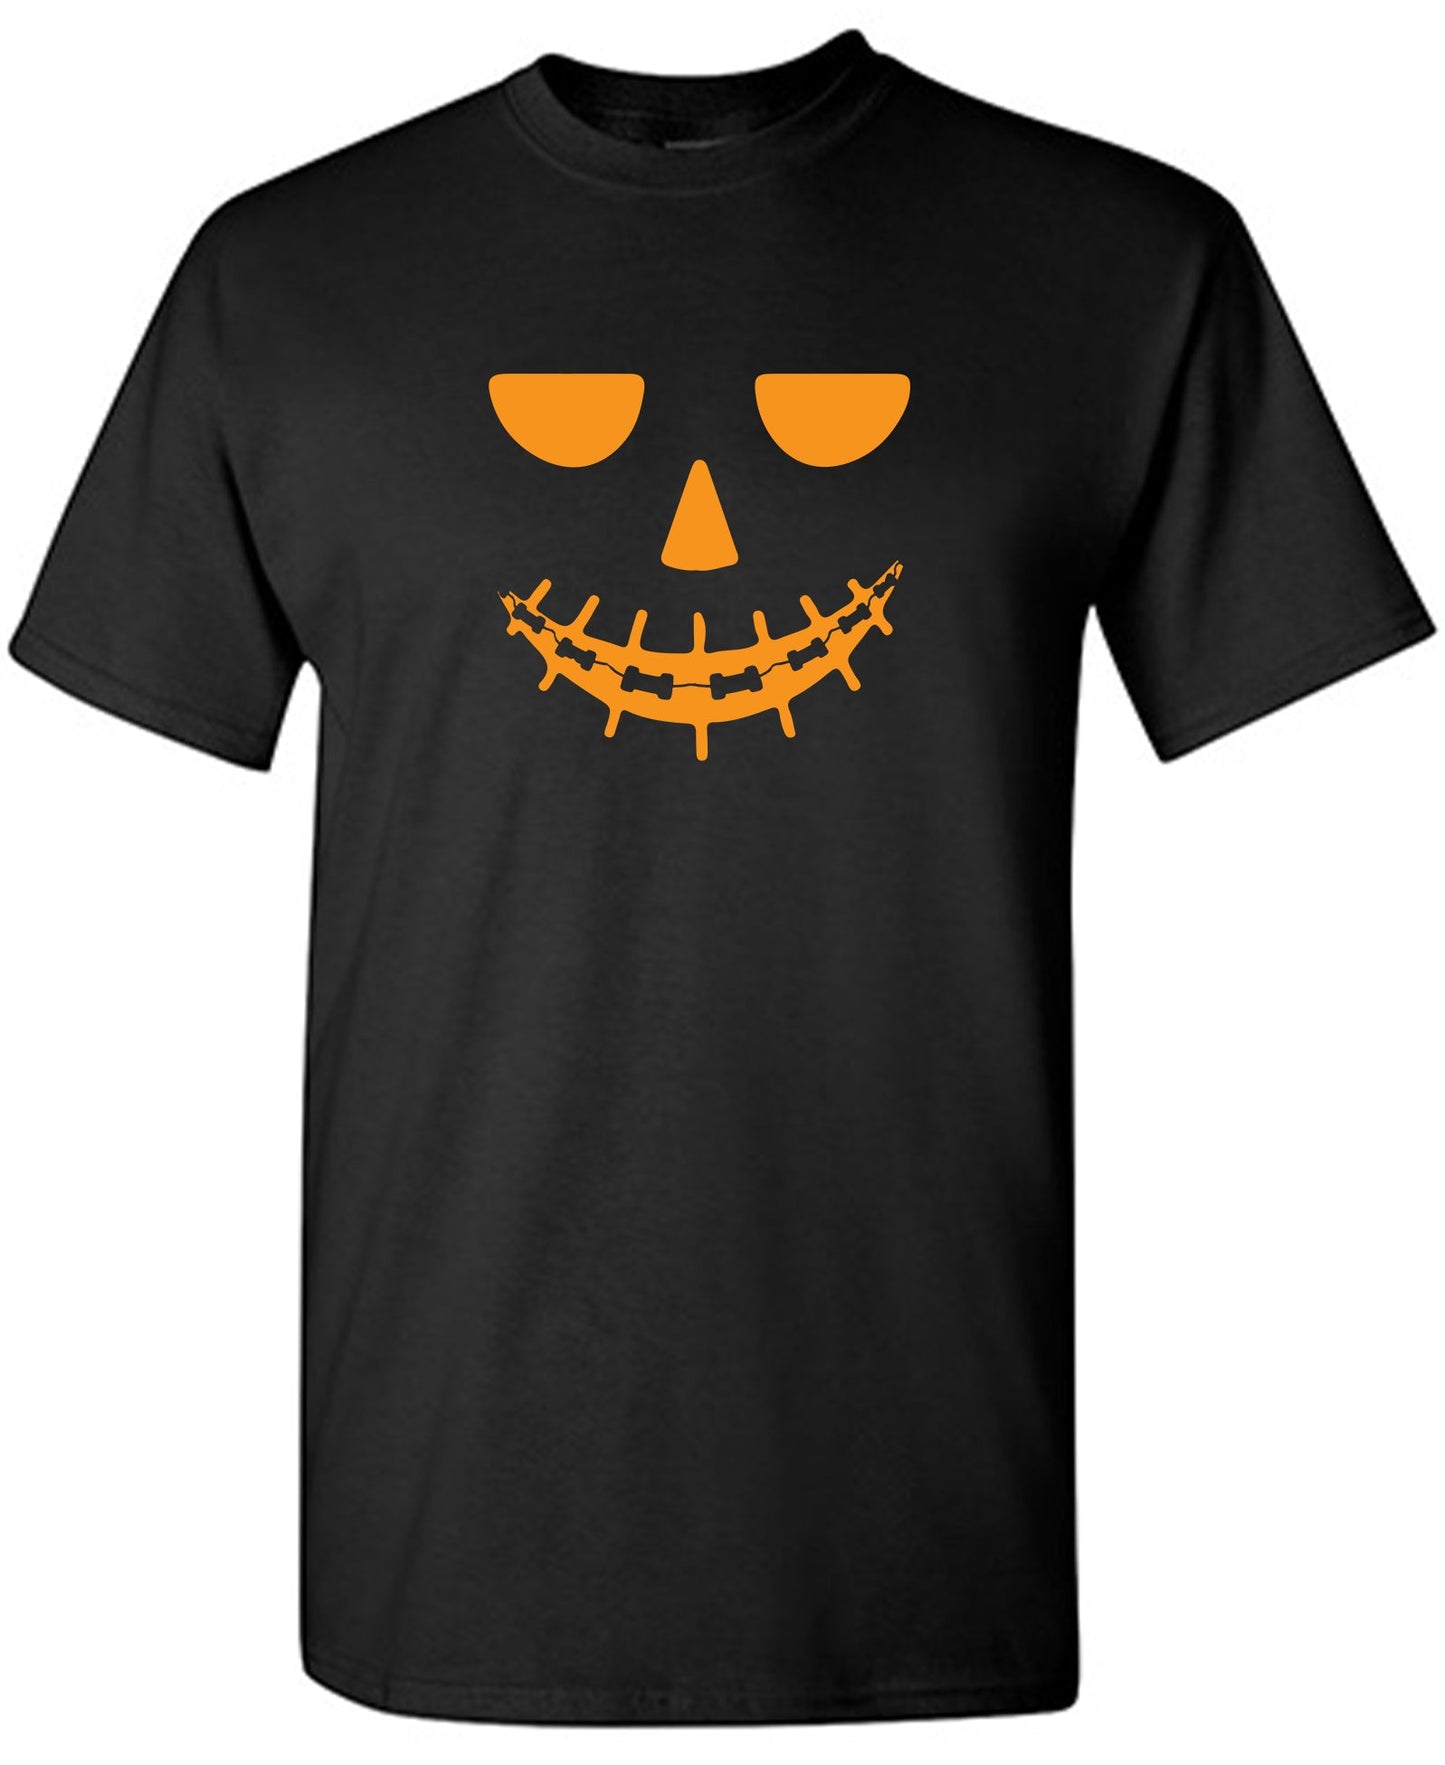 Pumpkin Braces Tee - Funny Graphic T Shirts